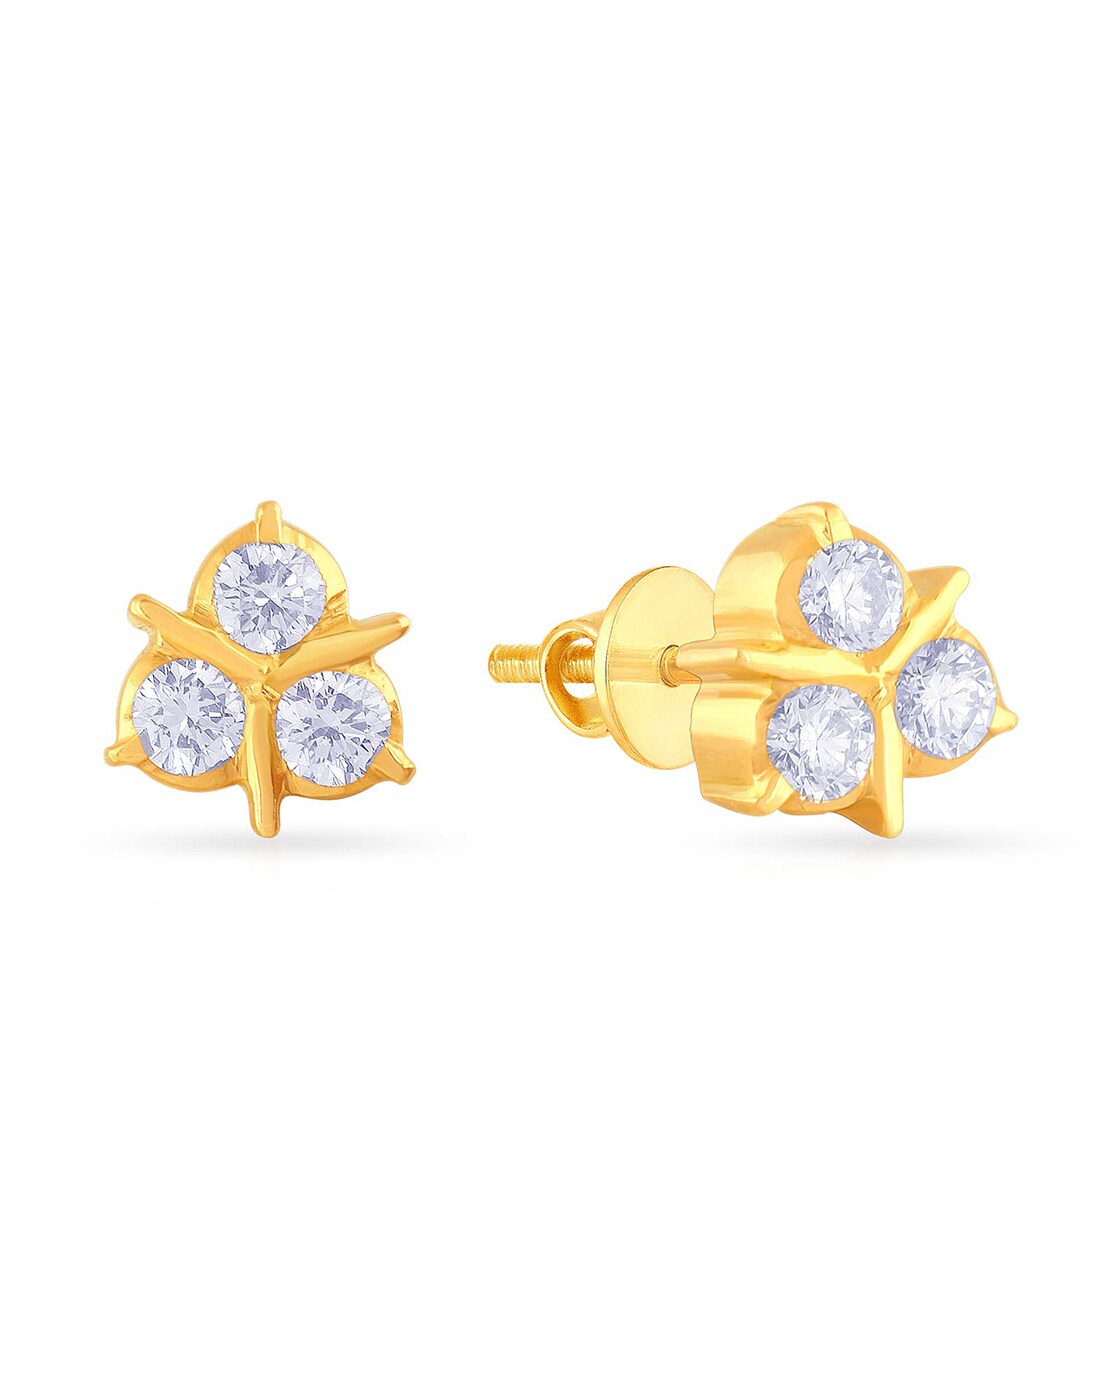 Malabar Gold Diamond Earrings With Price| Latest Diamond Earrings  Designs|Light Weight Gold Earrings - YouTube